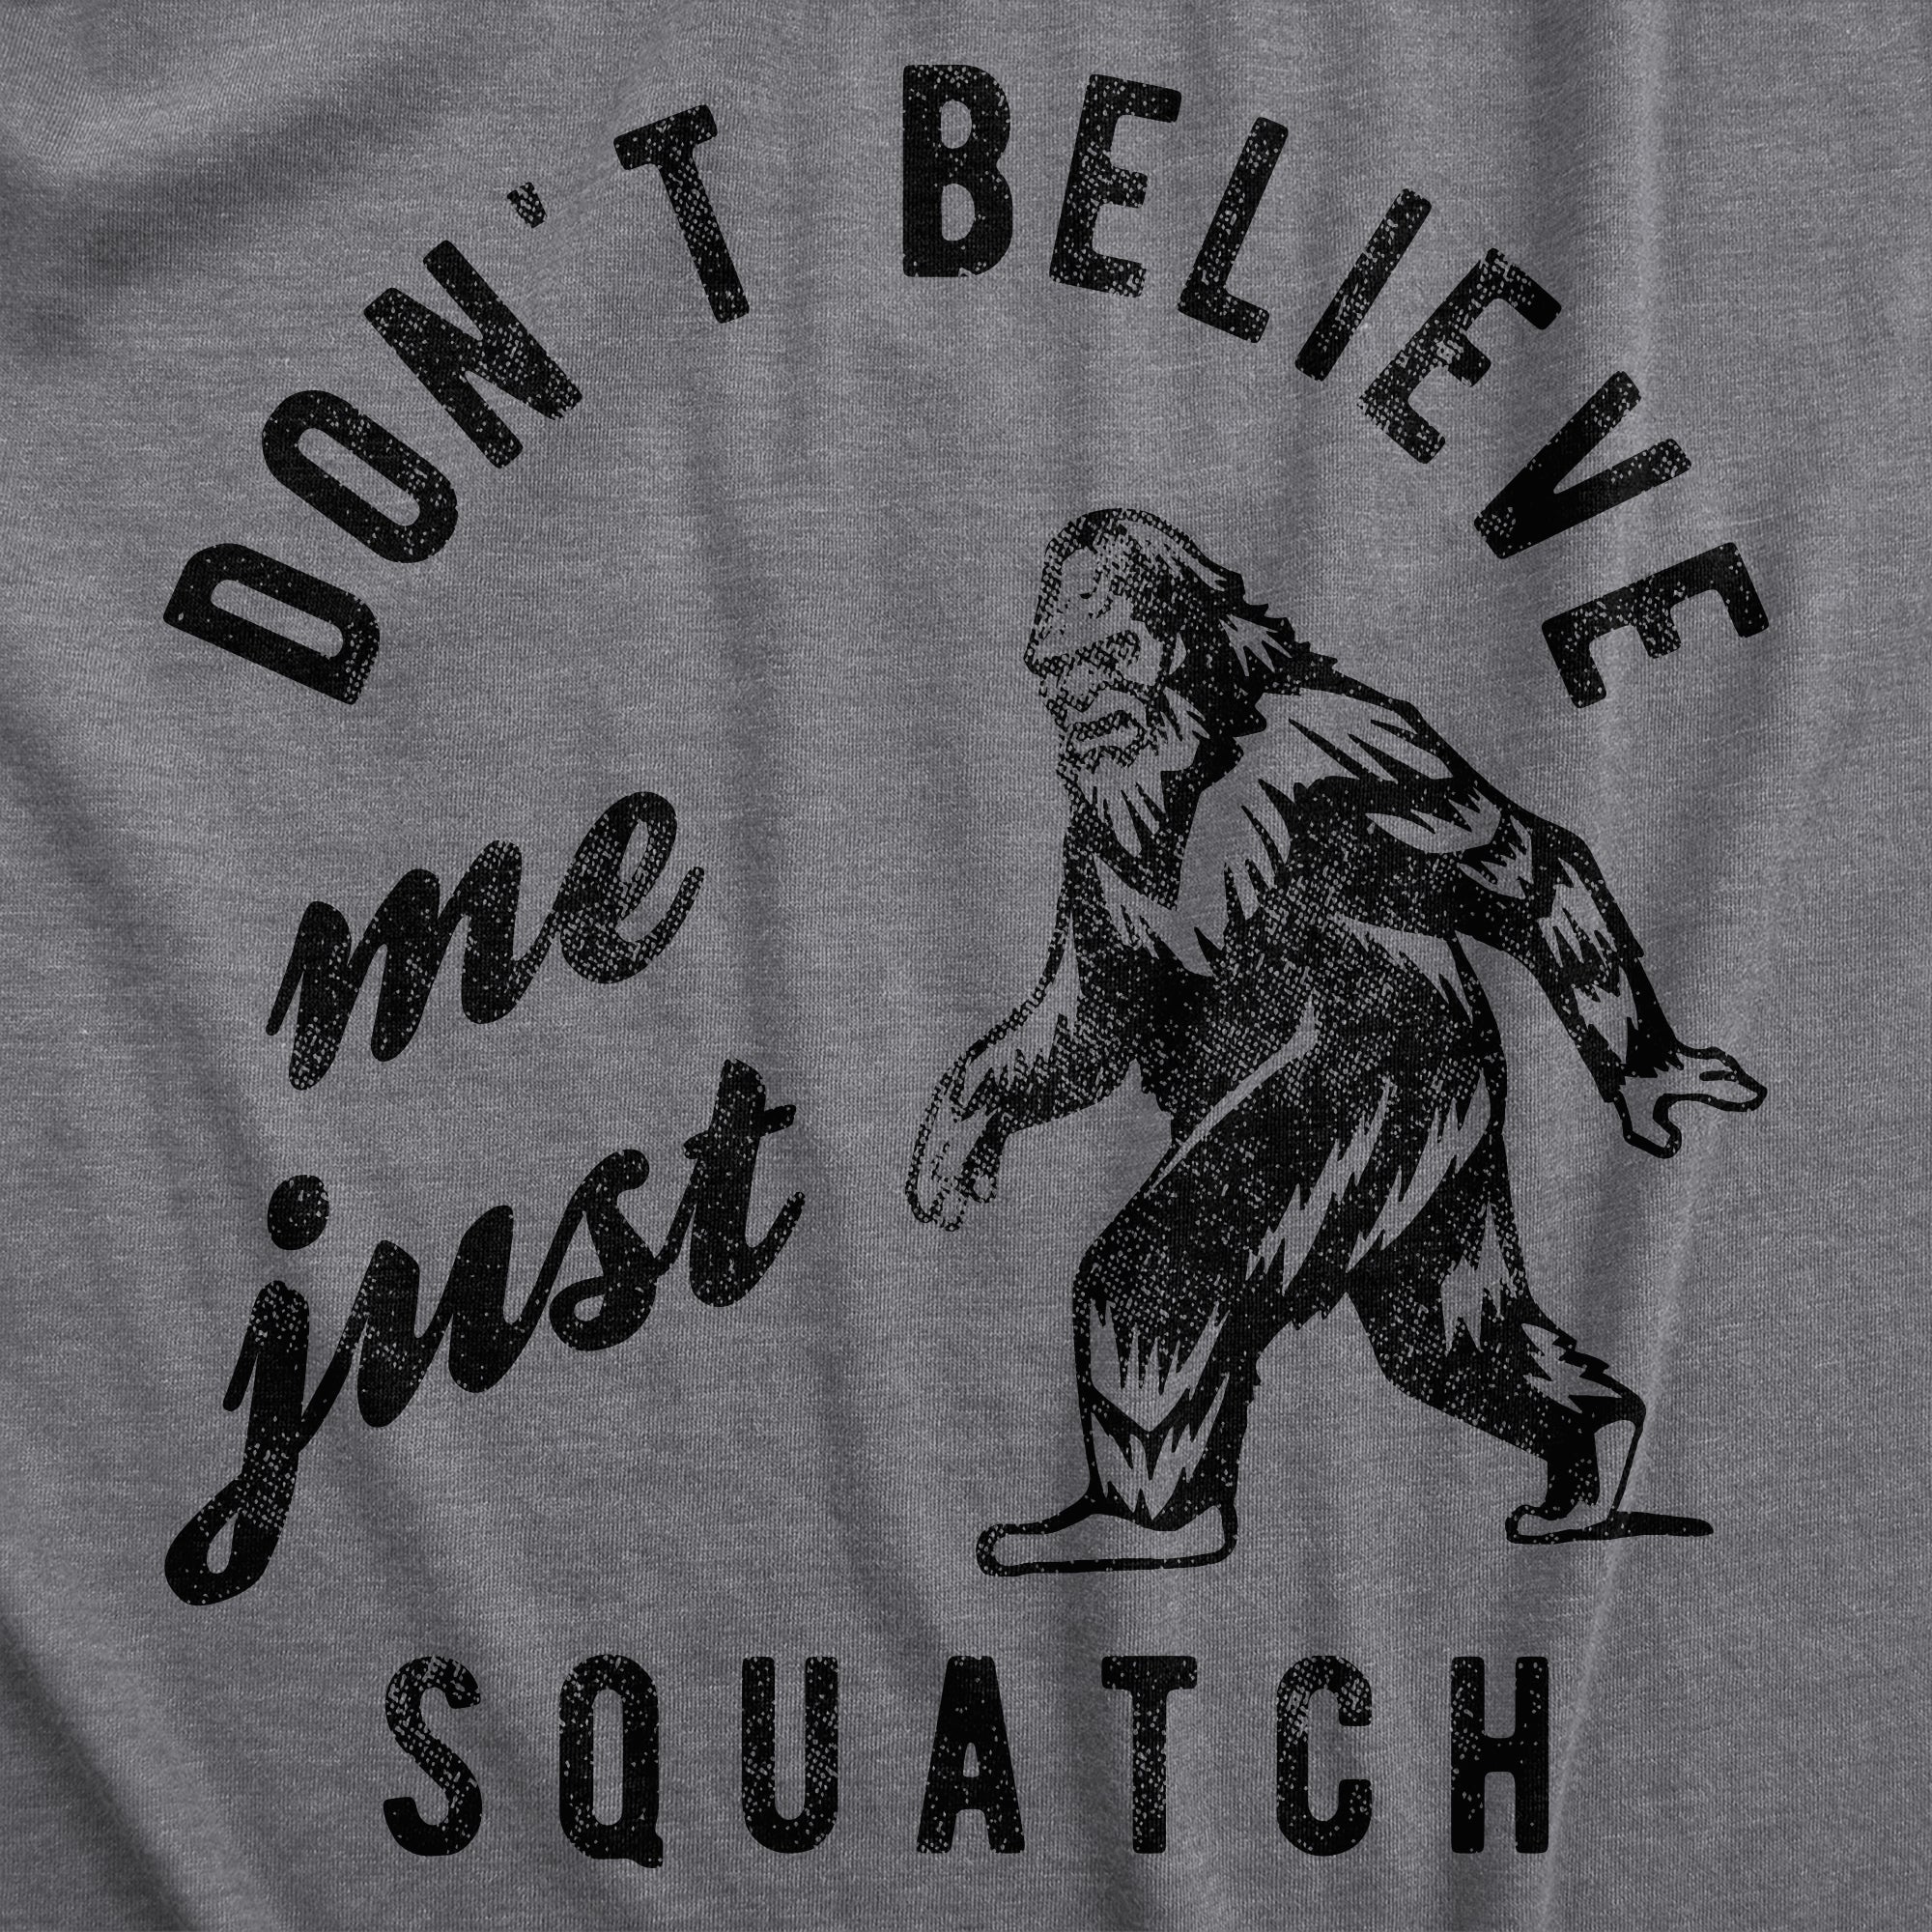 Funny Dark Heather Grey Dont Believe Me Just Squatch Mens T Shirt Nerdy animal Tee